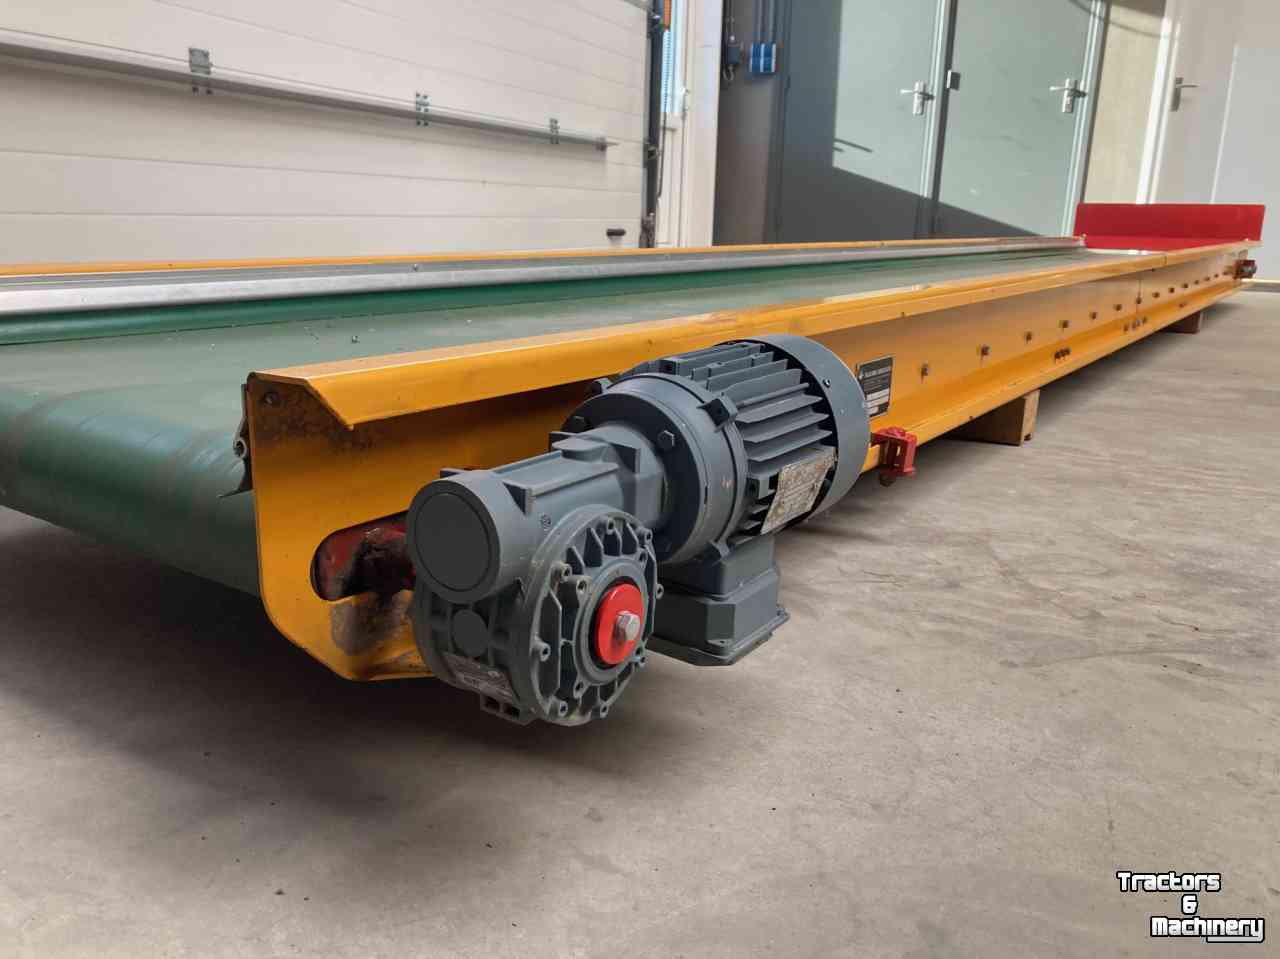 Conveyor Bijlsma Hercules 500-65